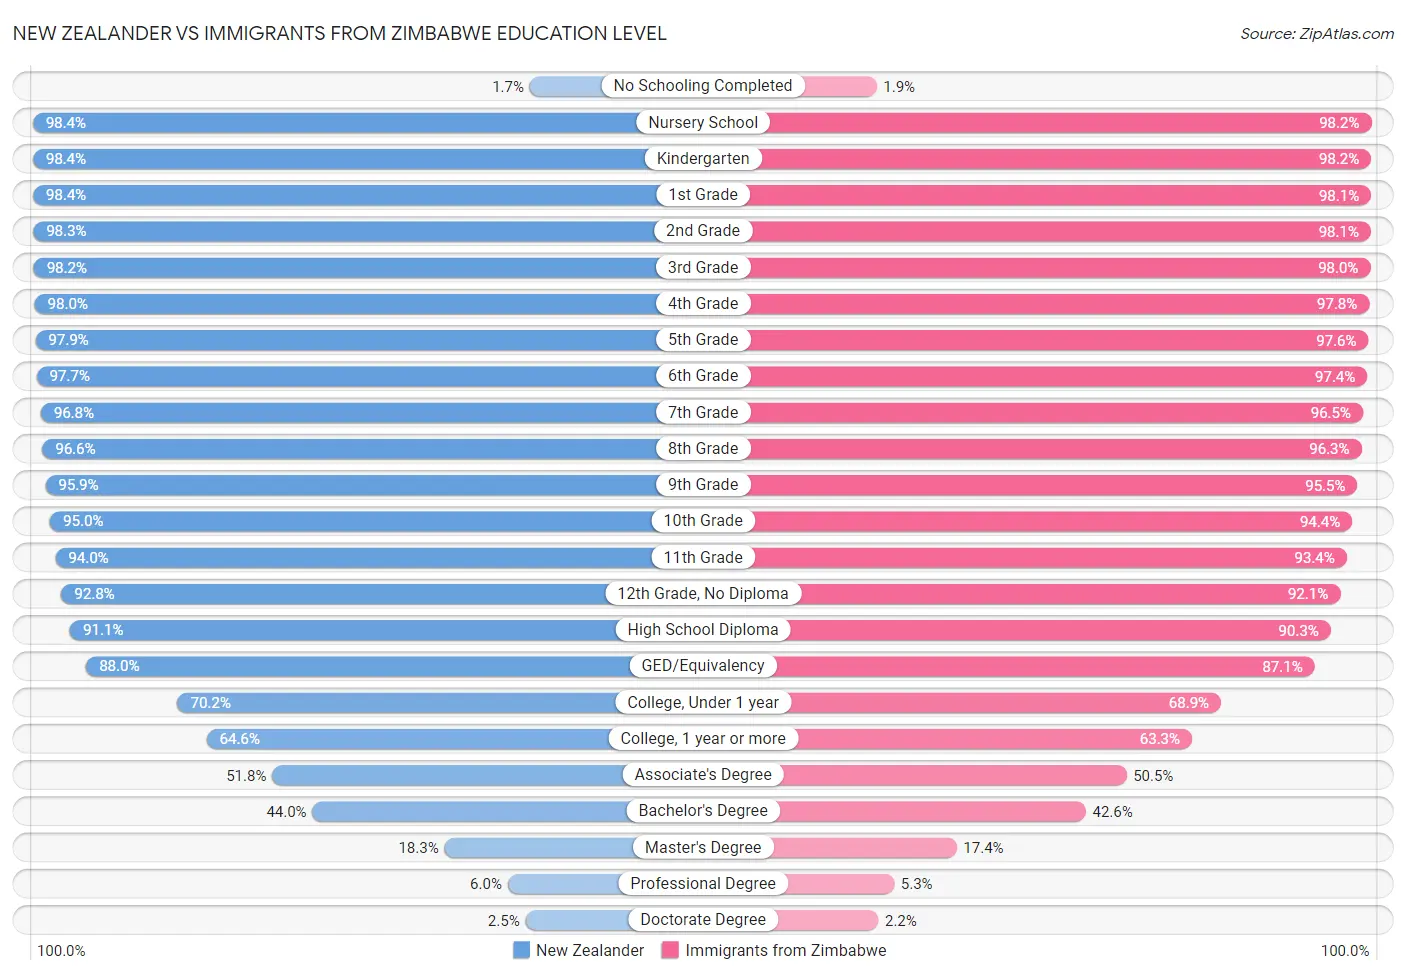 New Zealander vs Immigrants from Zimbabwe Education Level